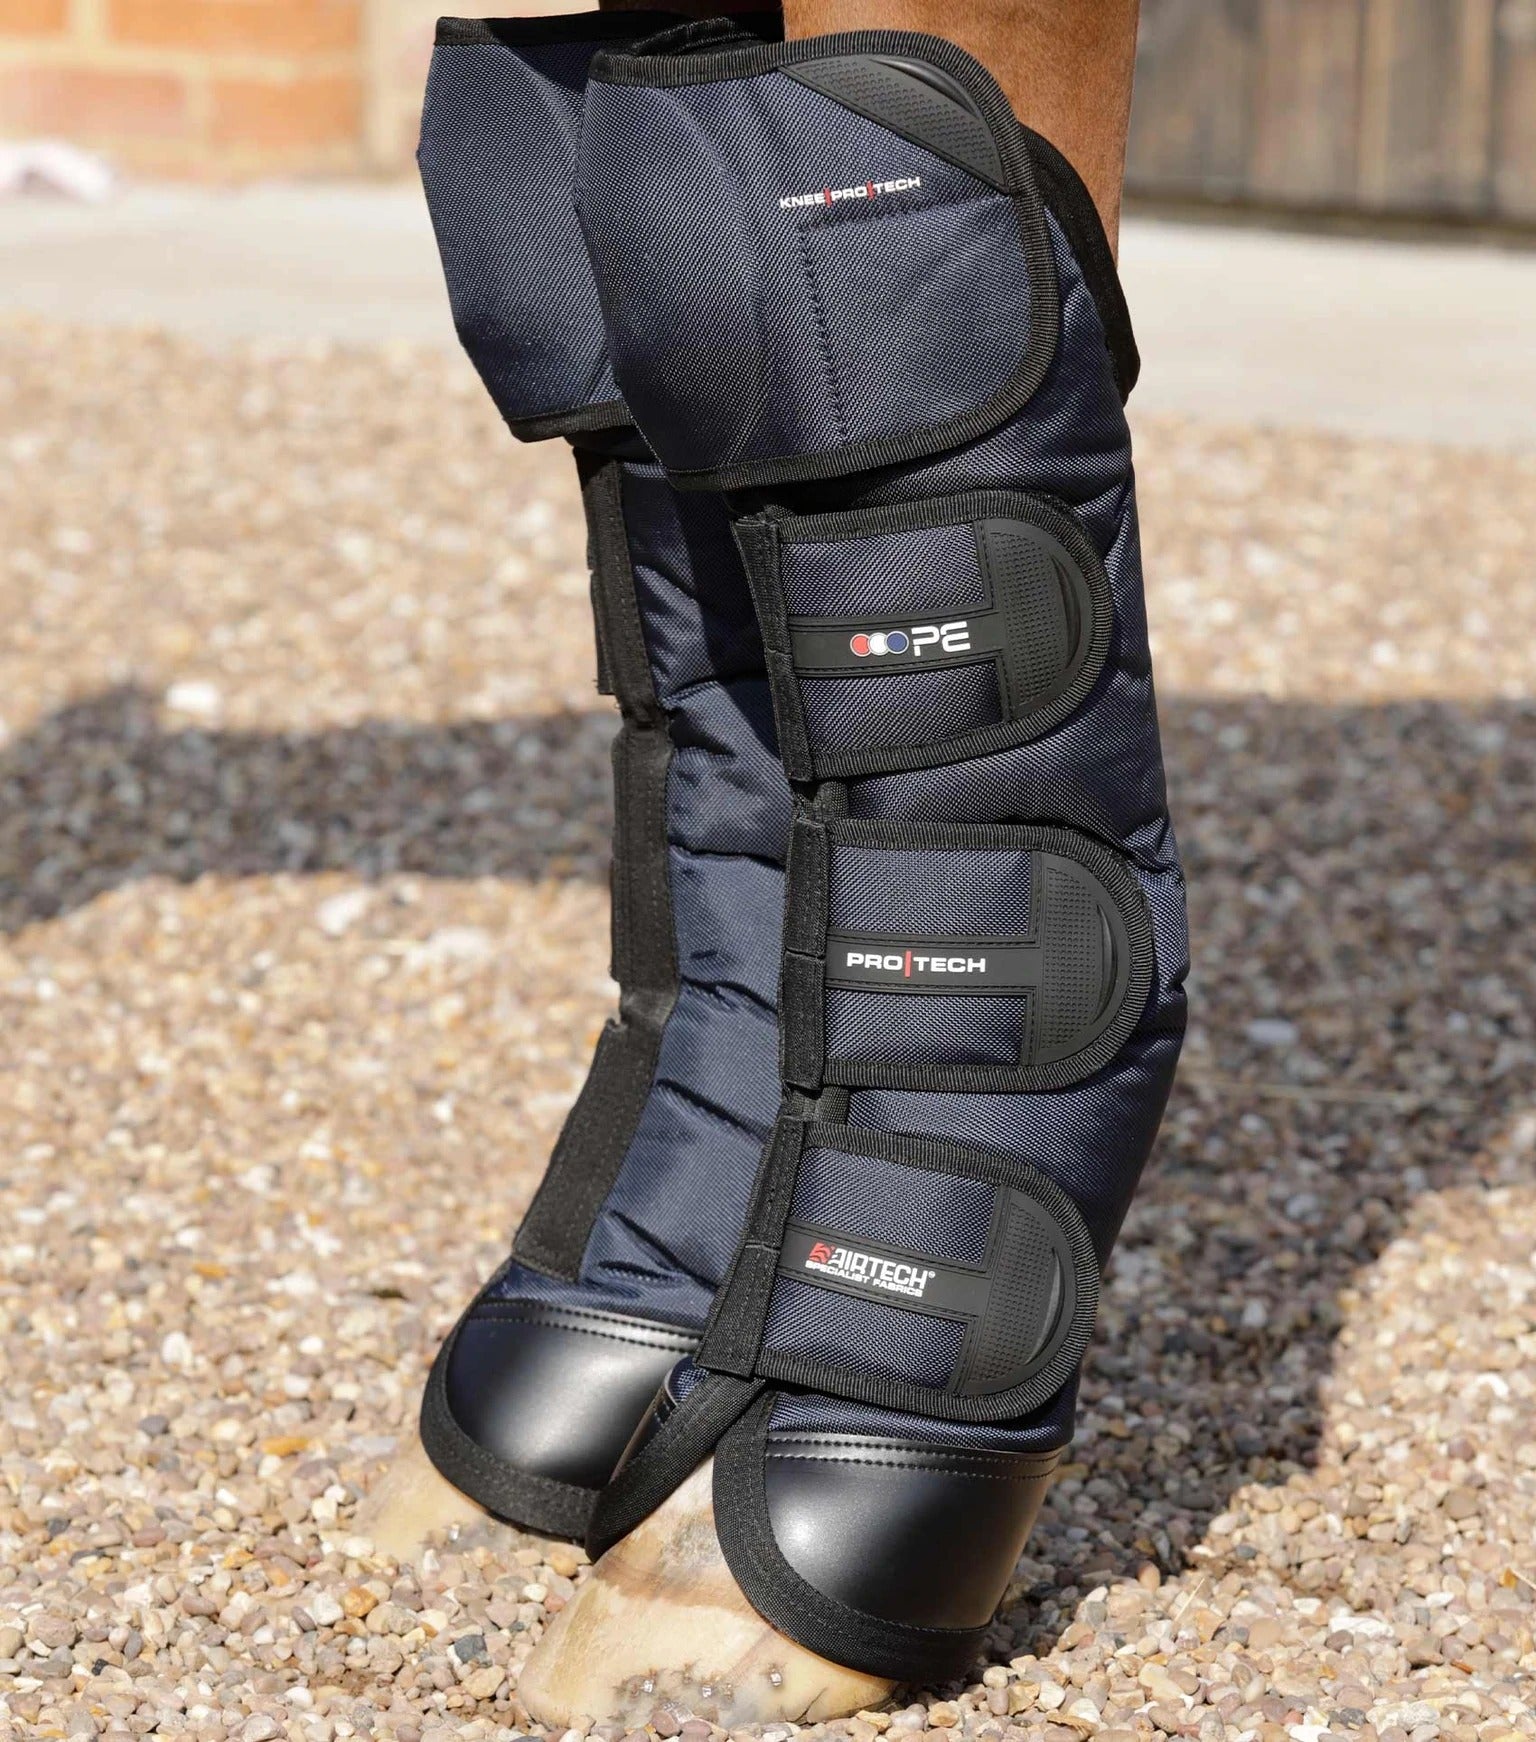 Ballistic Knee Pro-Tech Horse Travel Boots